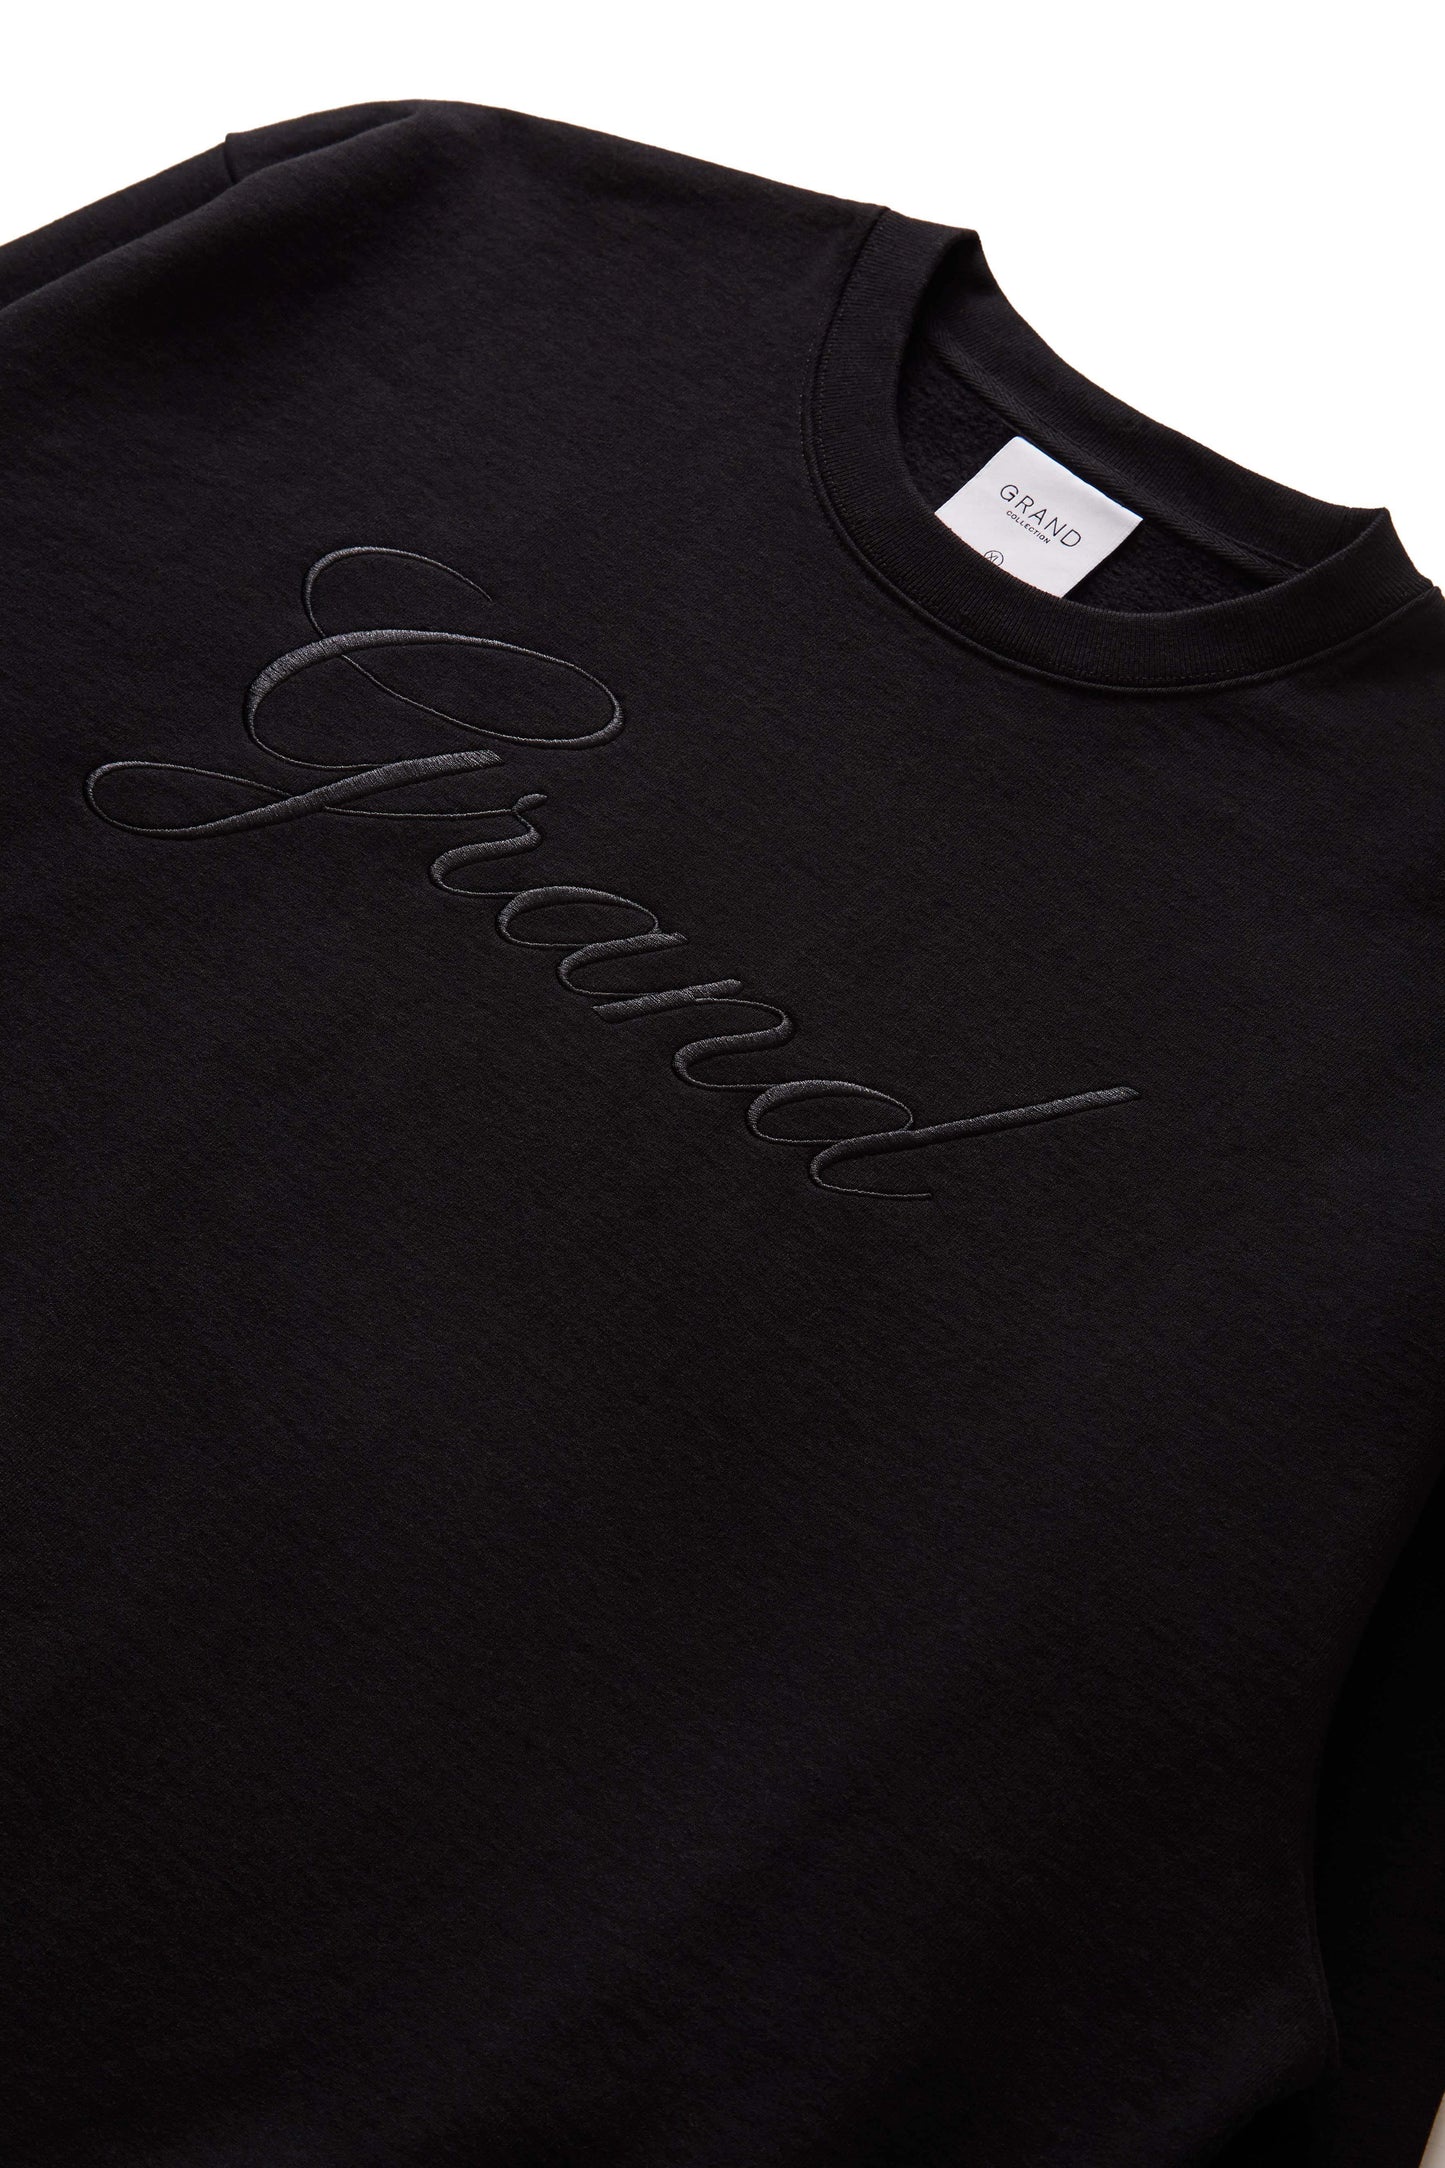 Grand Collection - Embroidered Crewneck Sweatshirt Black